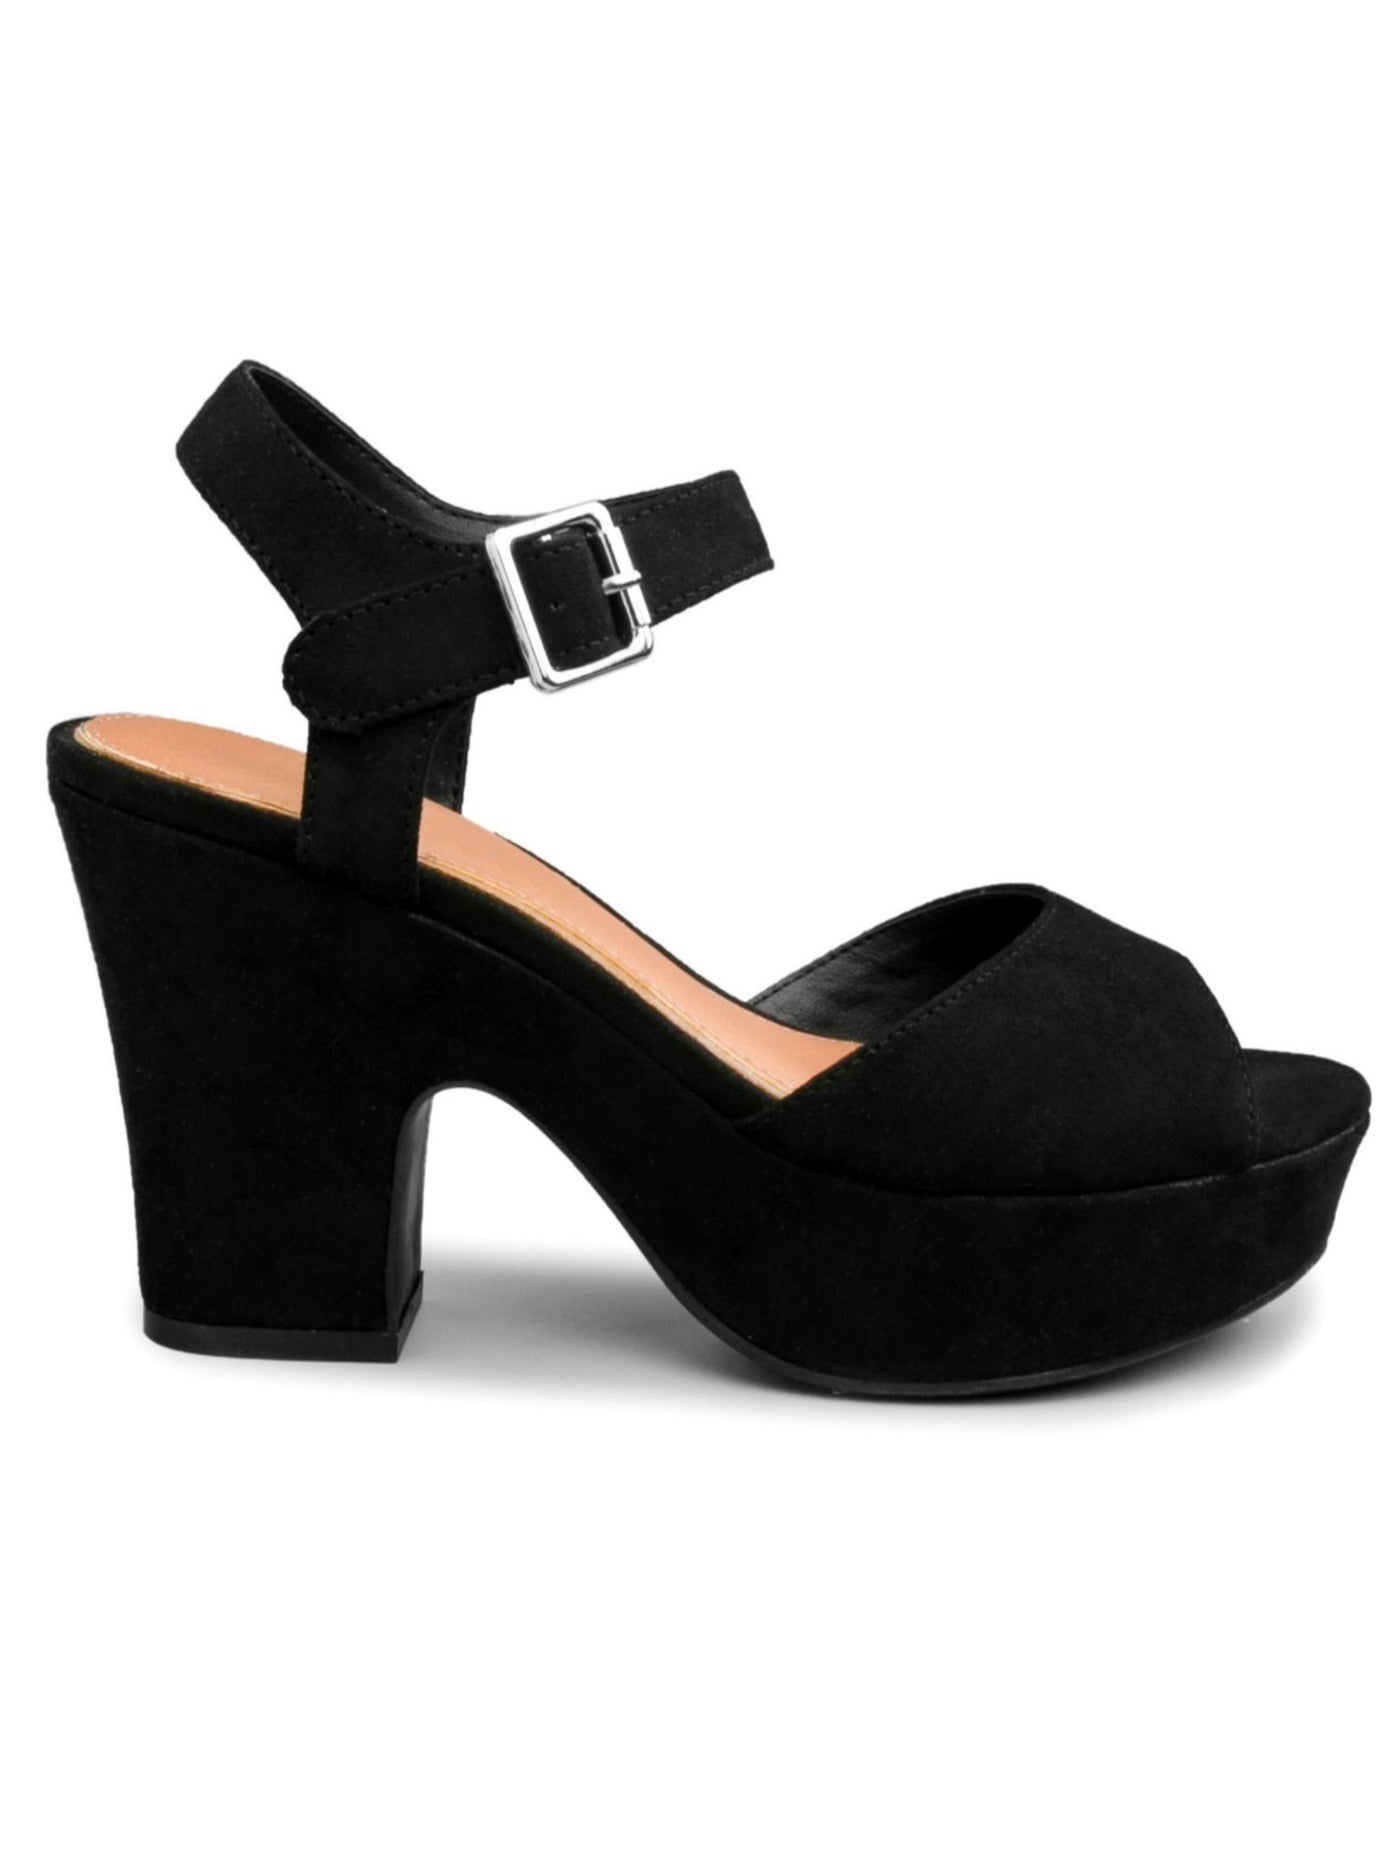 SUGAR Womens Black Animal Print Peep Toe Block Heel Buckle Dress Sandals Shoes 9.5